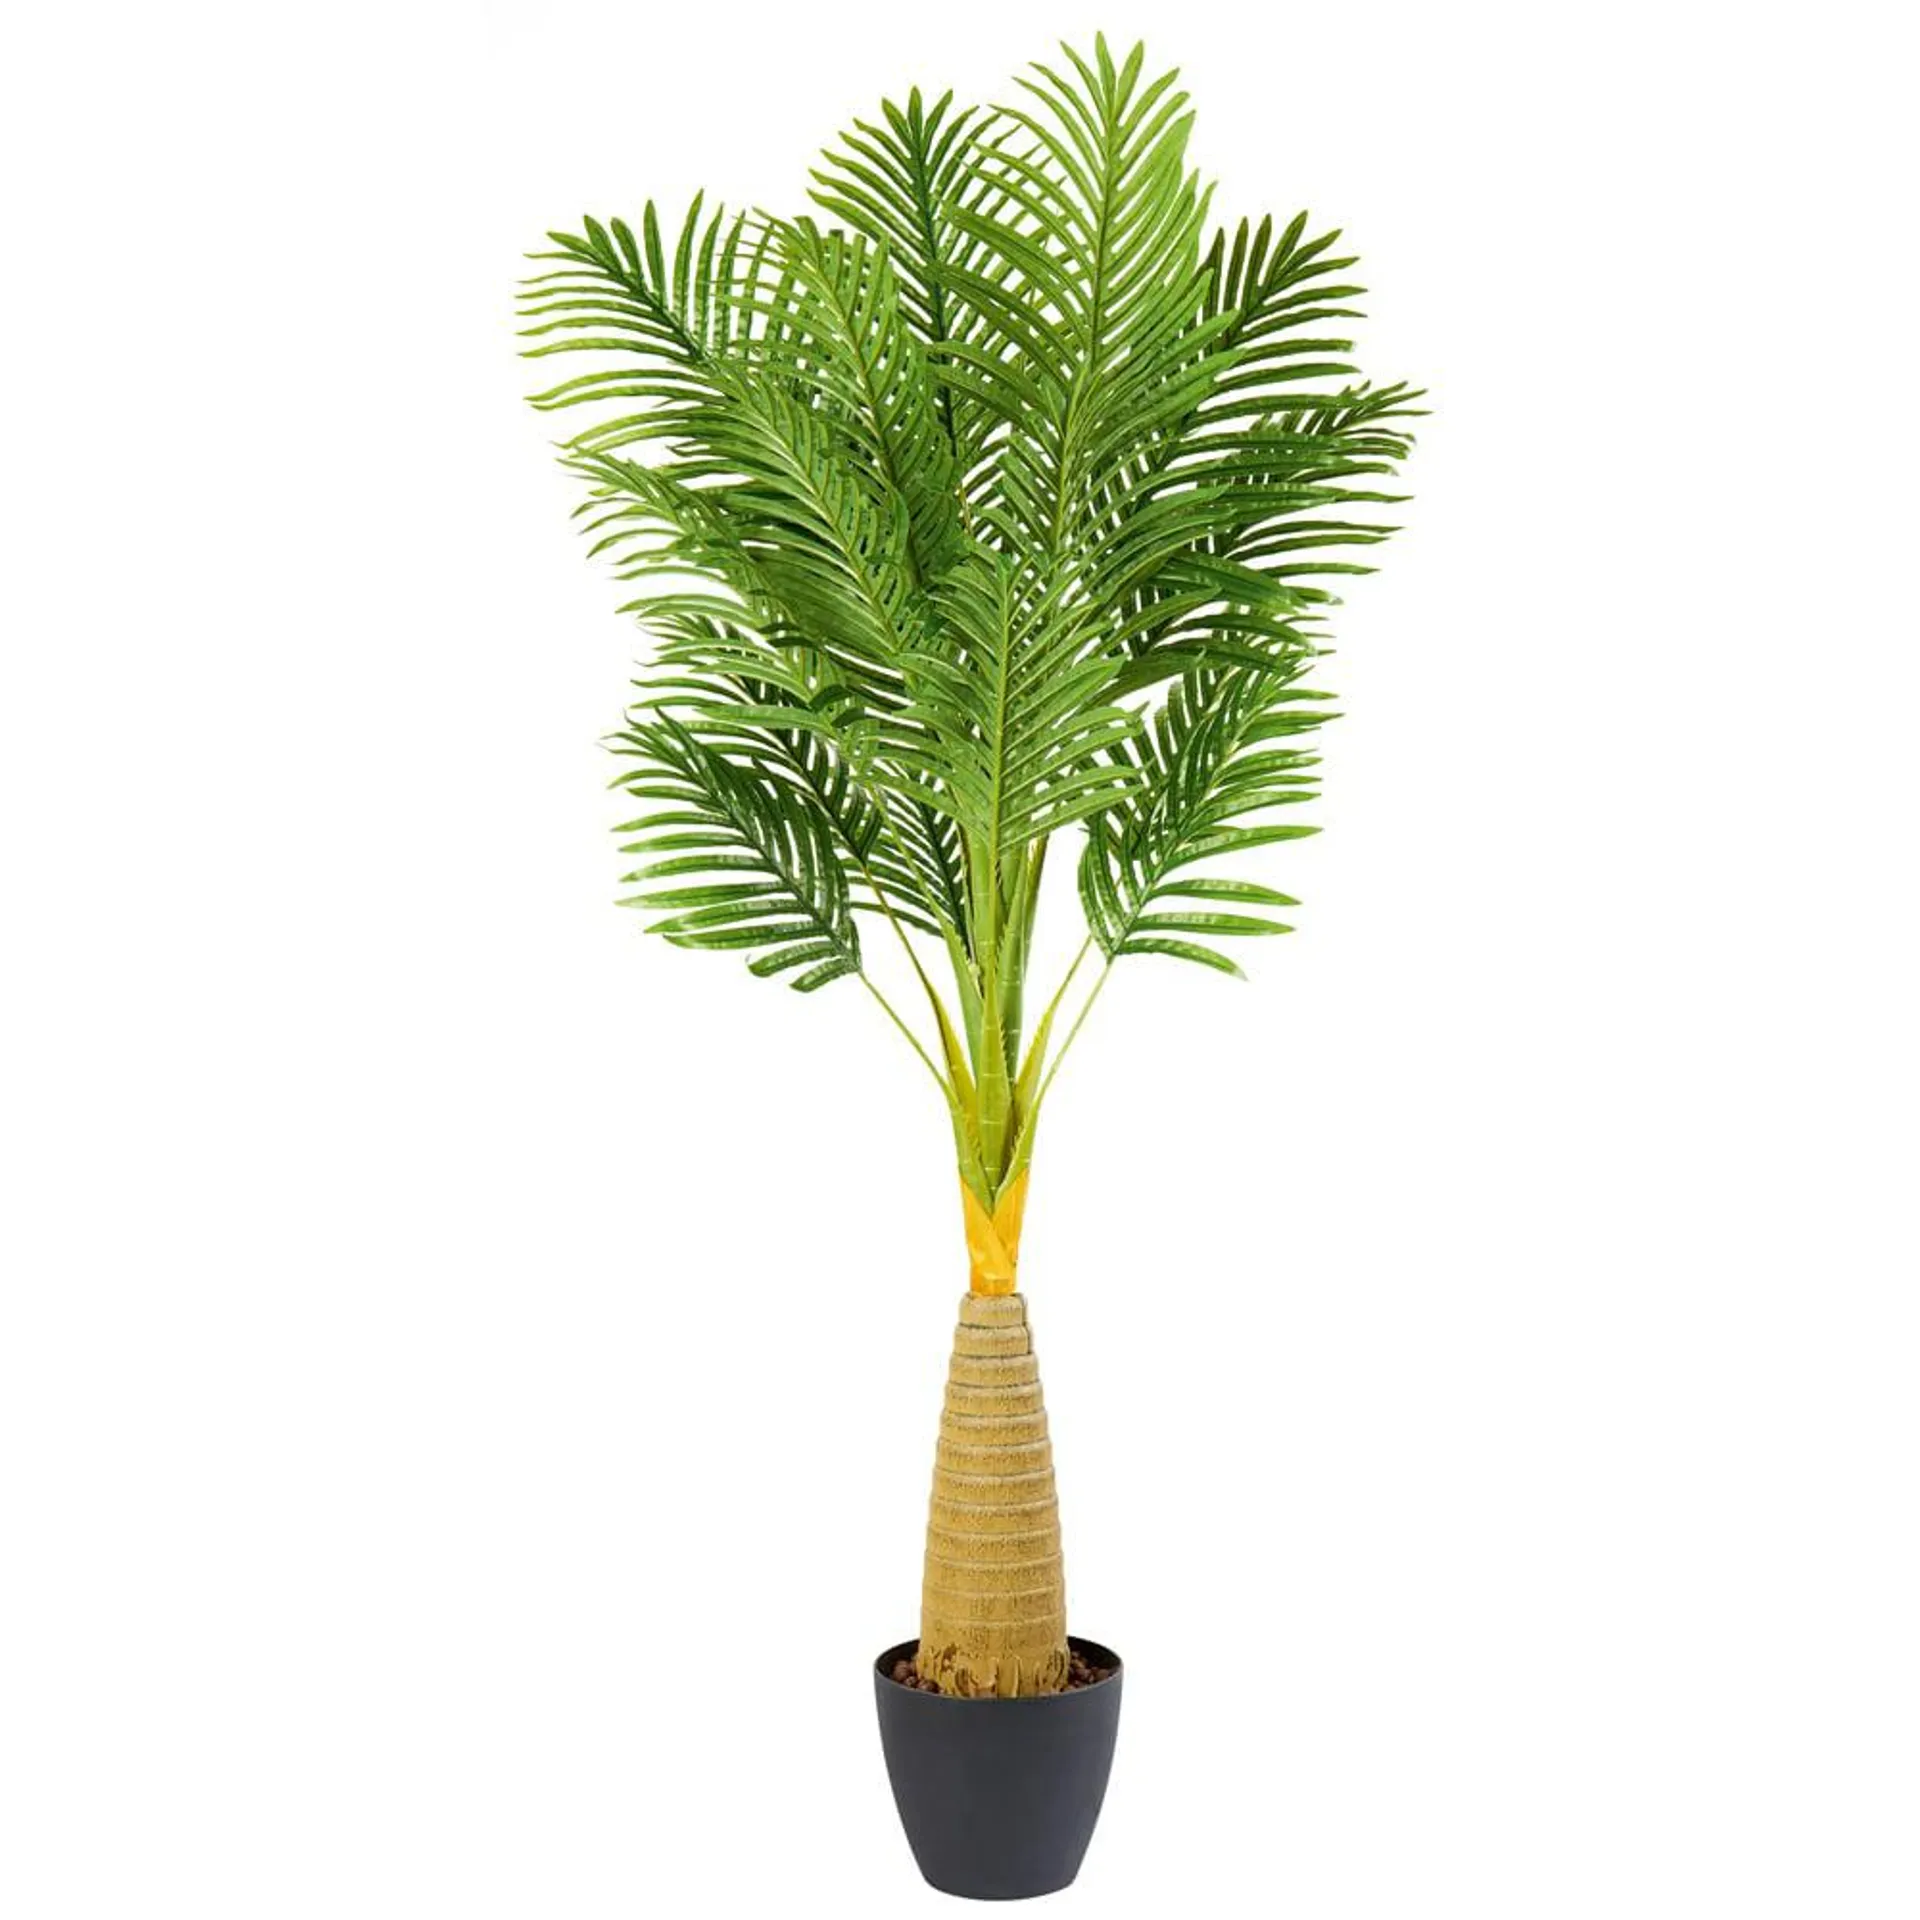 Premier Artificial Palm Tree in Pot 140cm